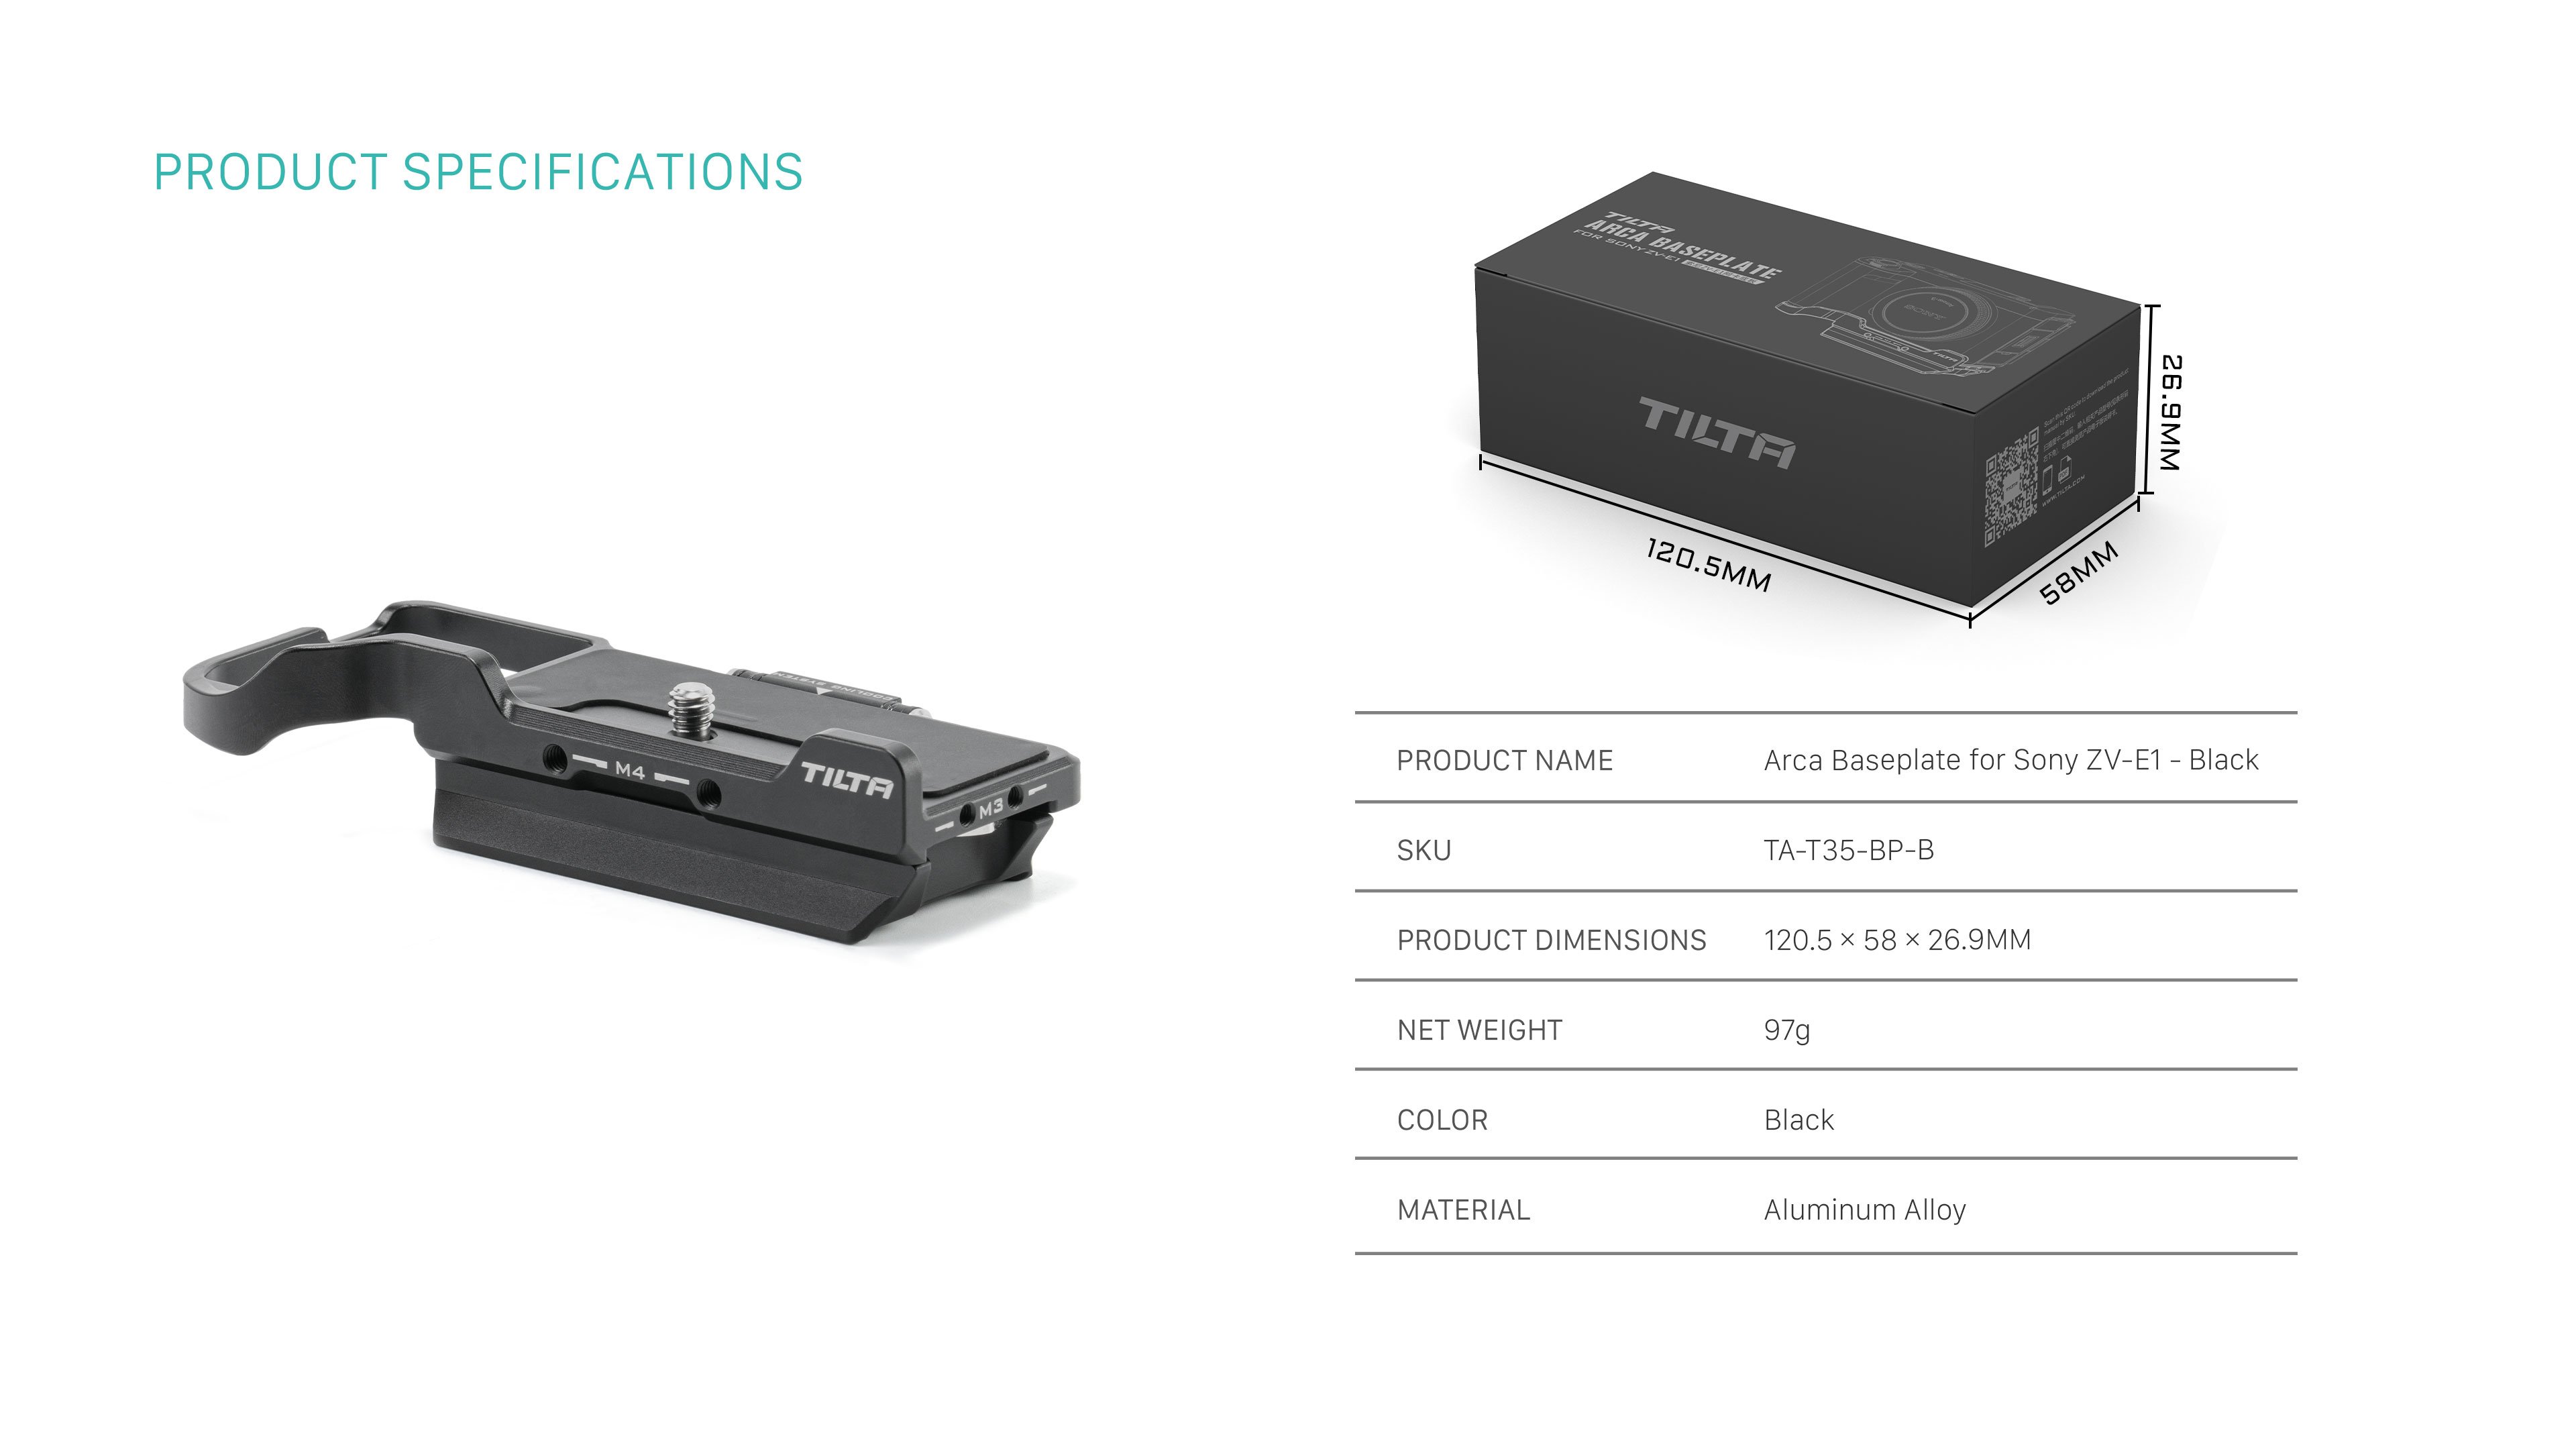 Arca Baseplate for Sony ZV-E1 - Black